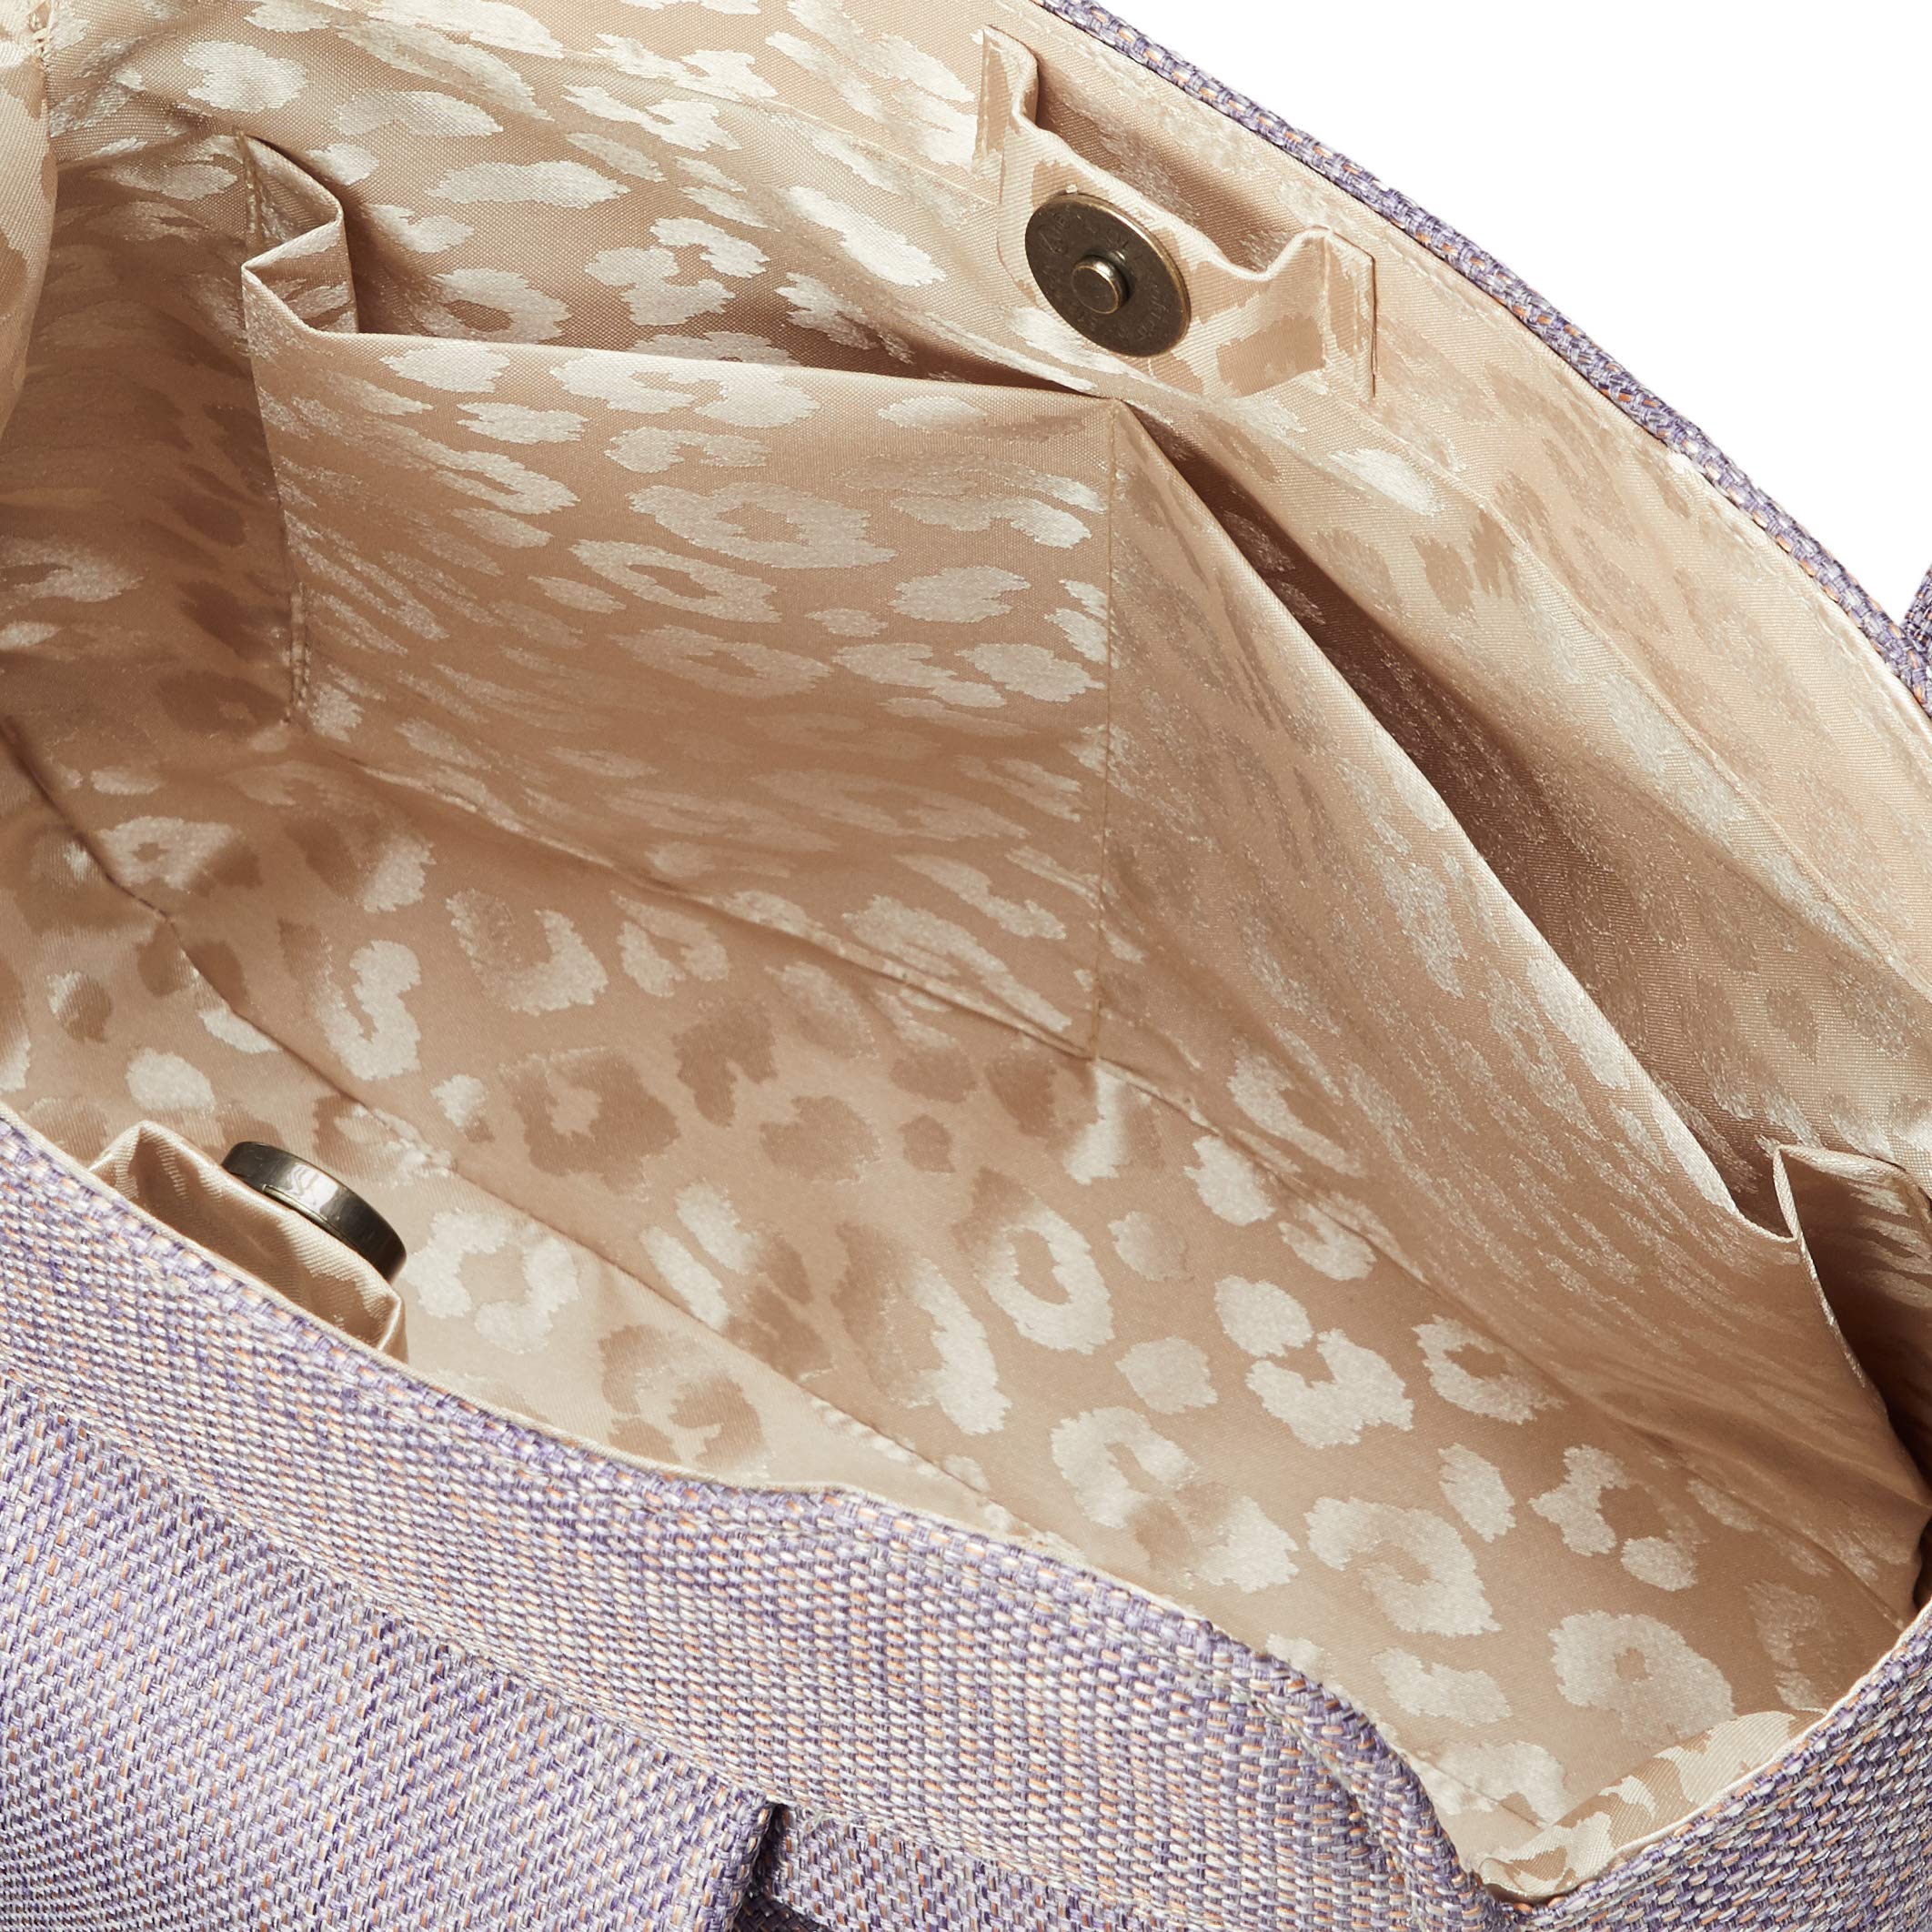 Sebian(セビアン) Handbag (Japanese-Made in Japan)